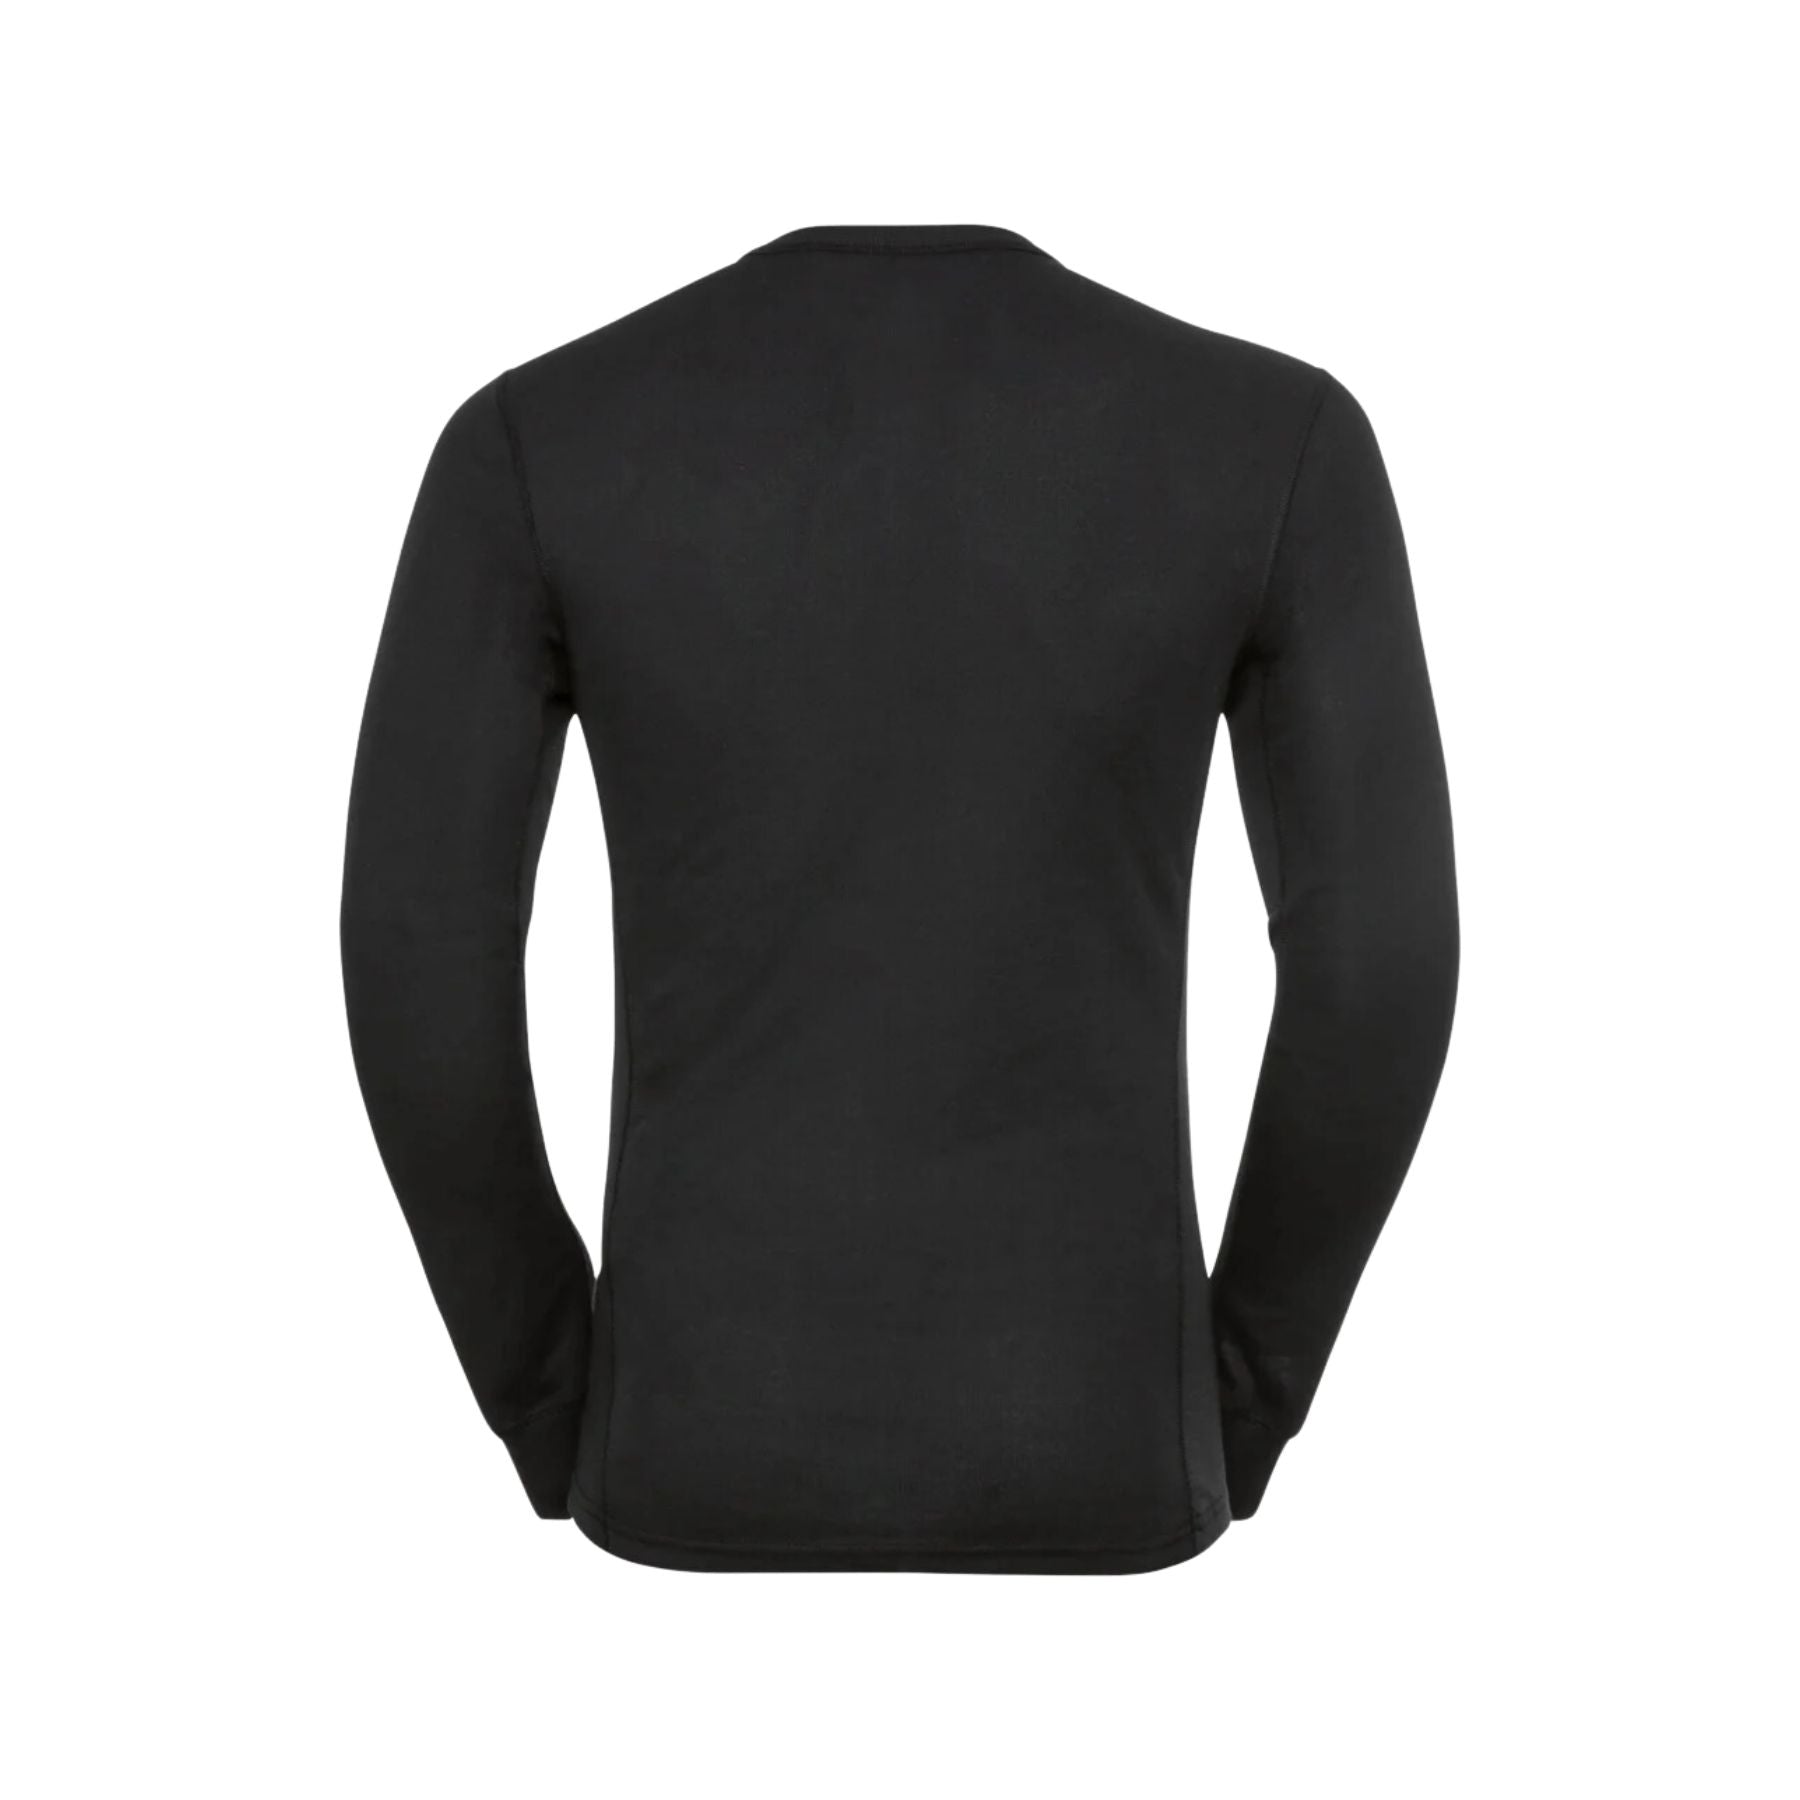 Odlo Men's Active Warm Base Layer Top in Black